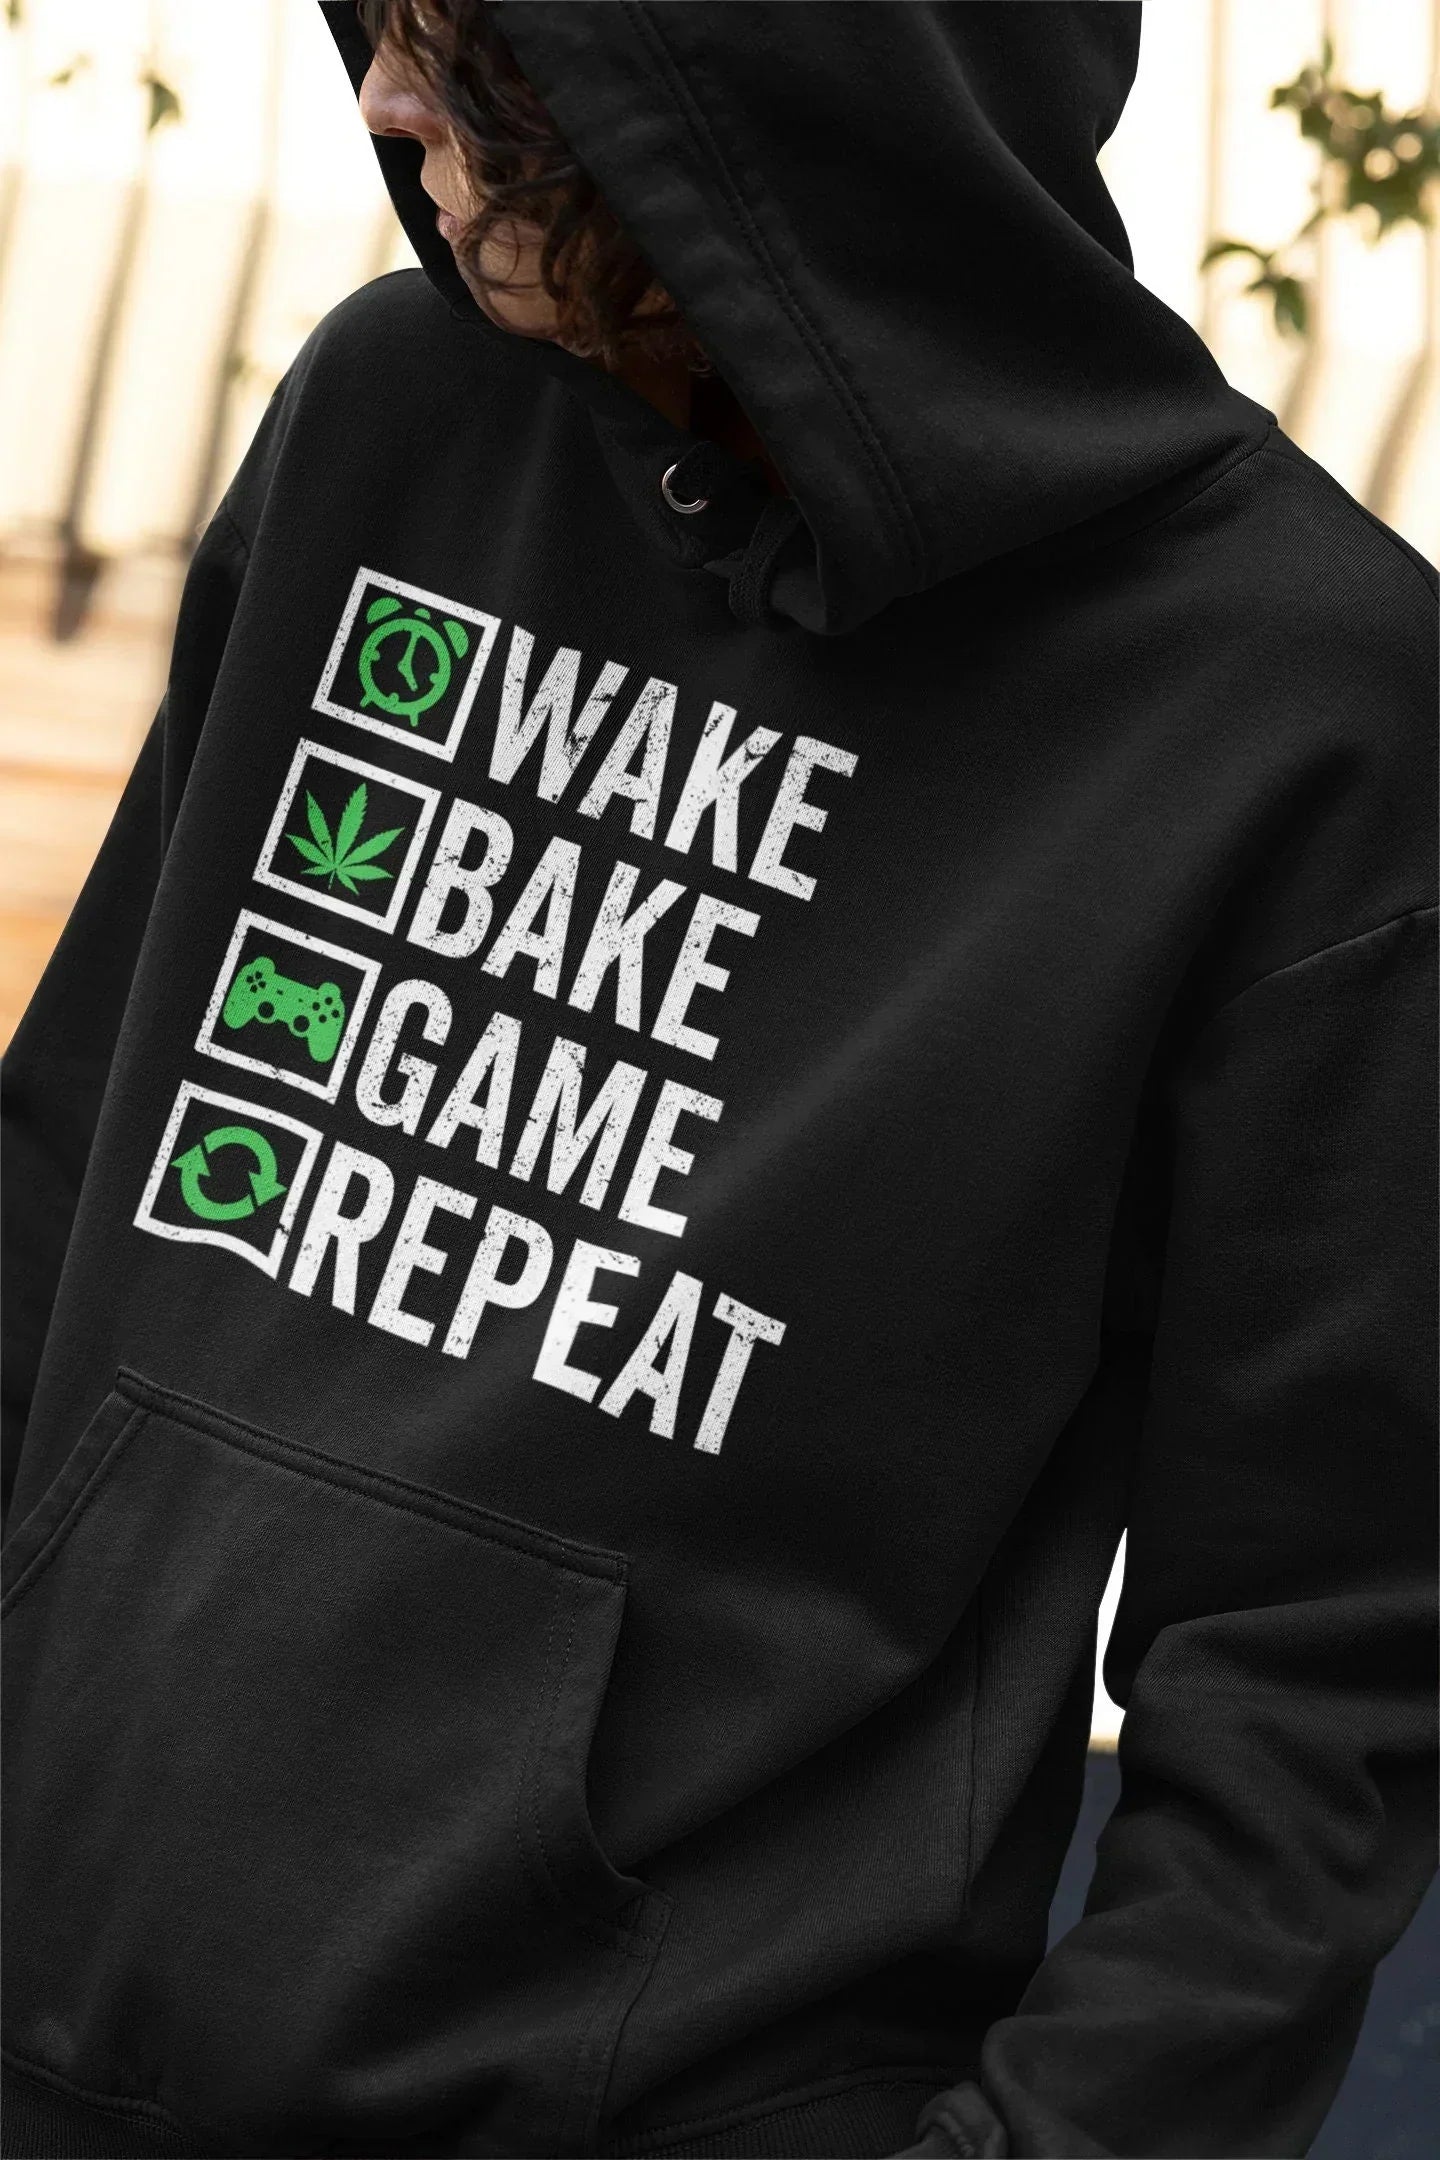 Wake Bake Game, Gamer Stoner Shirt HMDesignStudioUS